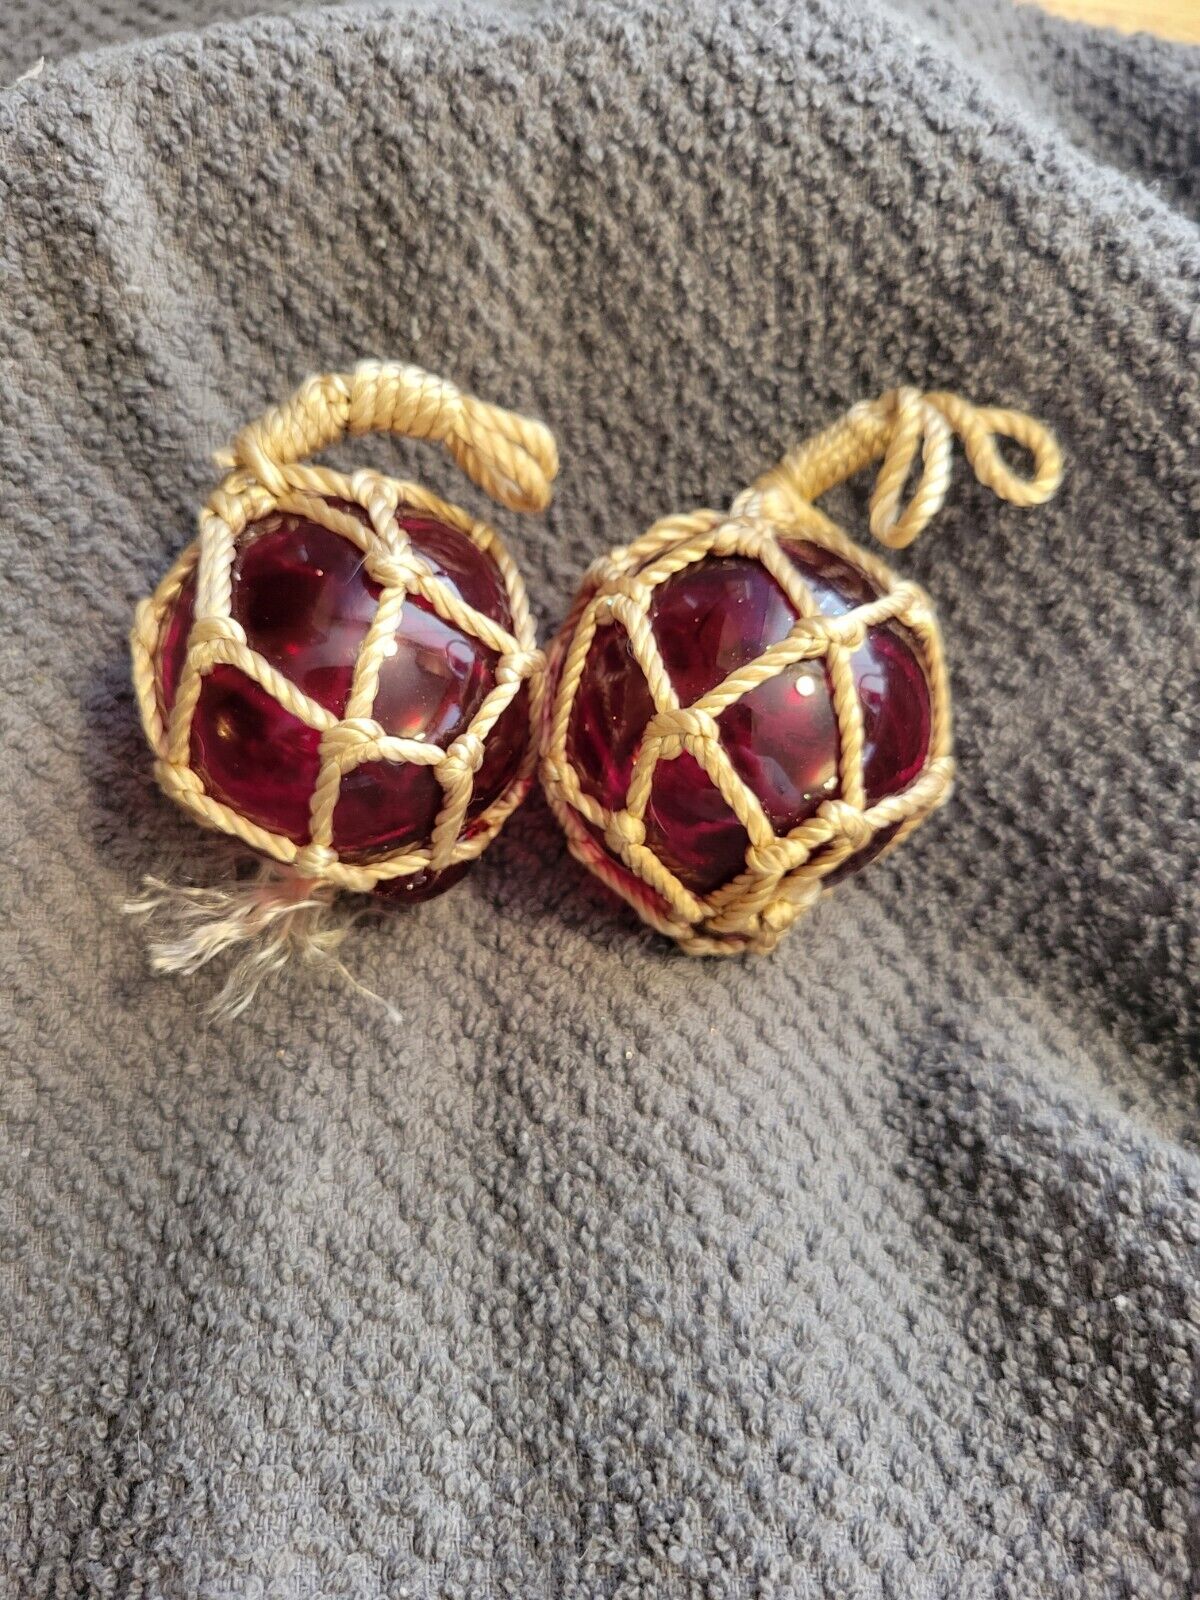 Nautical Glass Ball Float Ornaments Set of 2 Deep Red Handblown Ornaments 